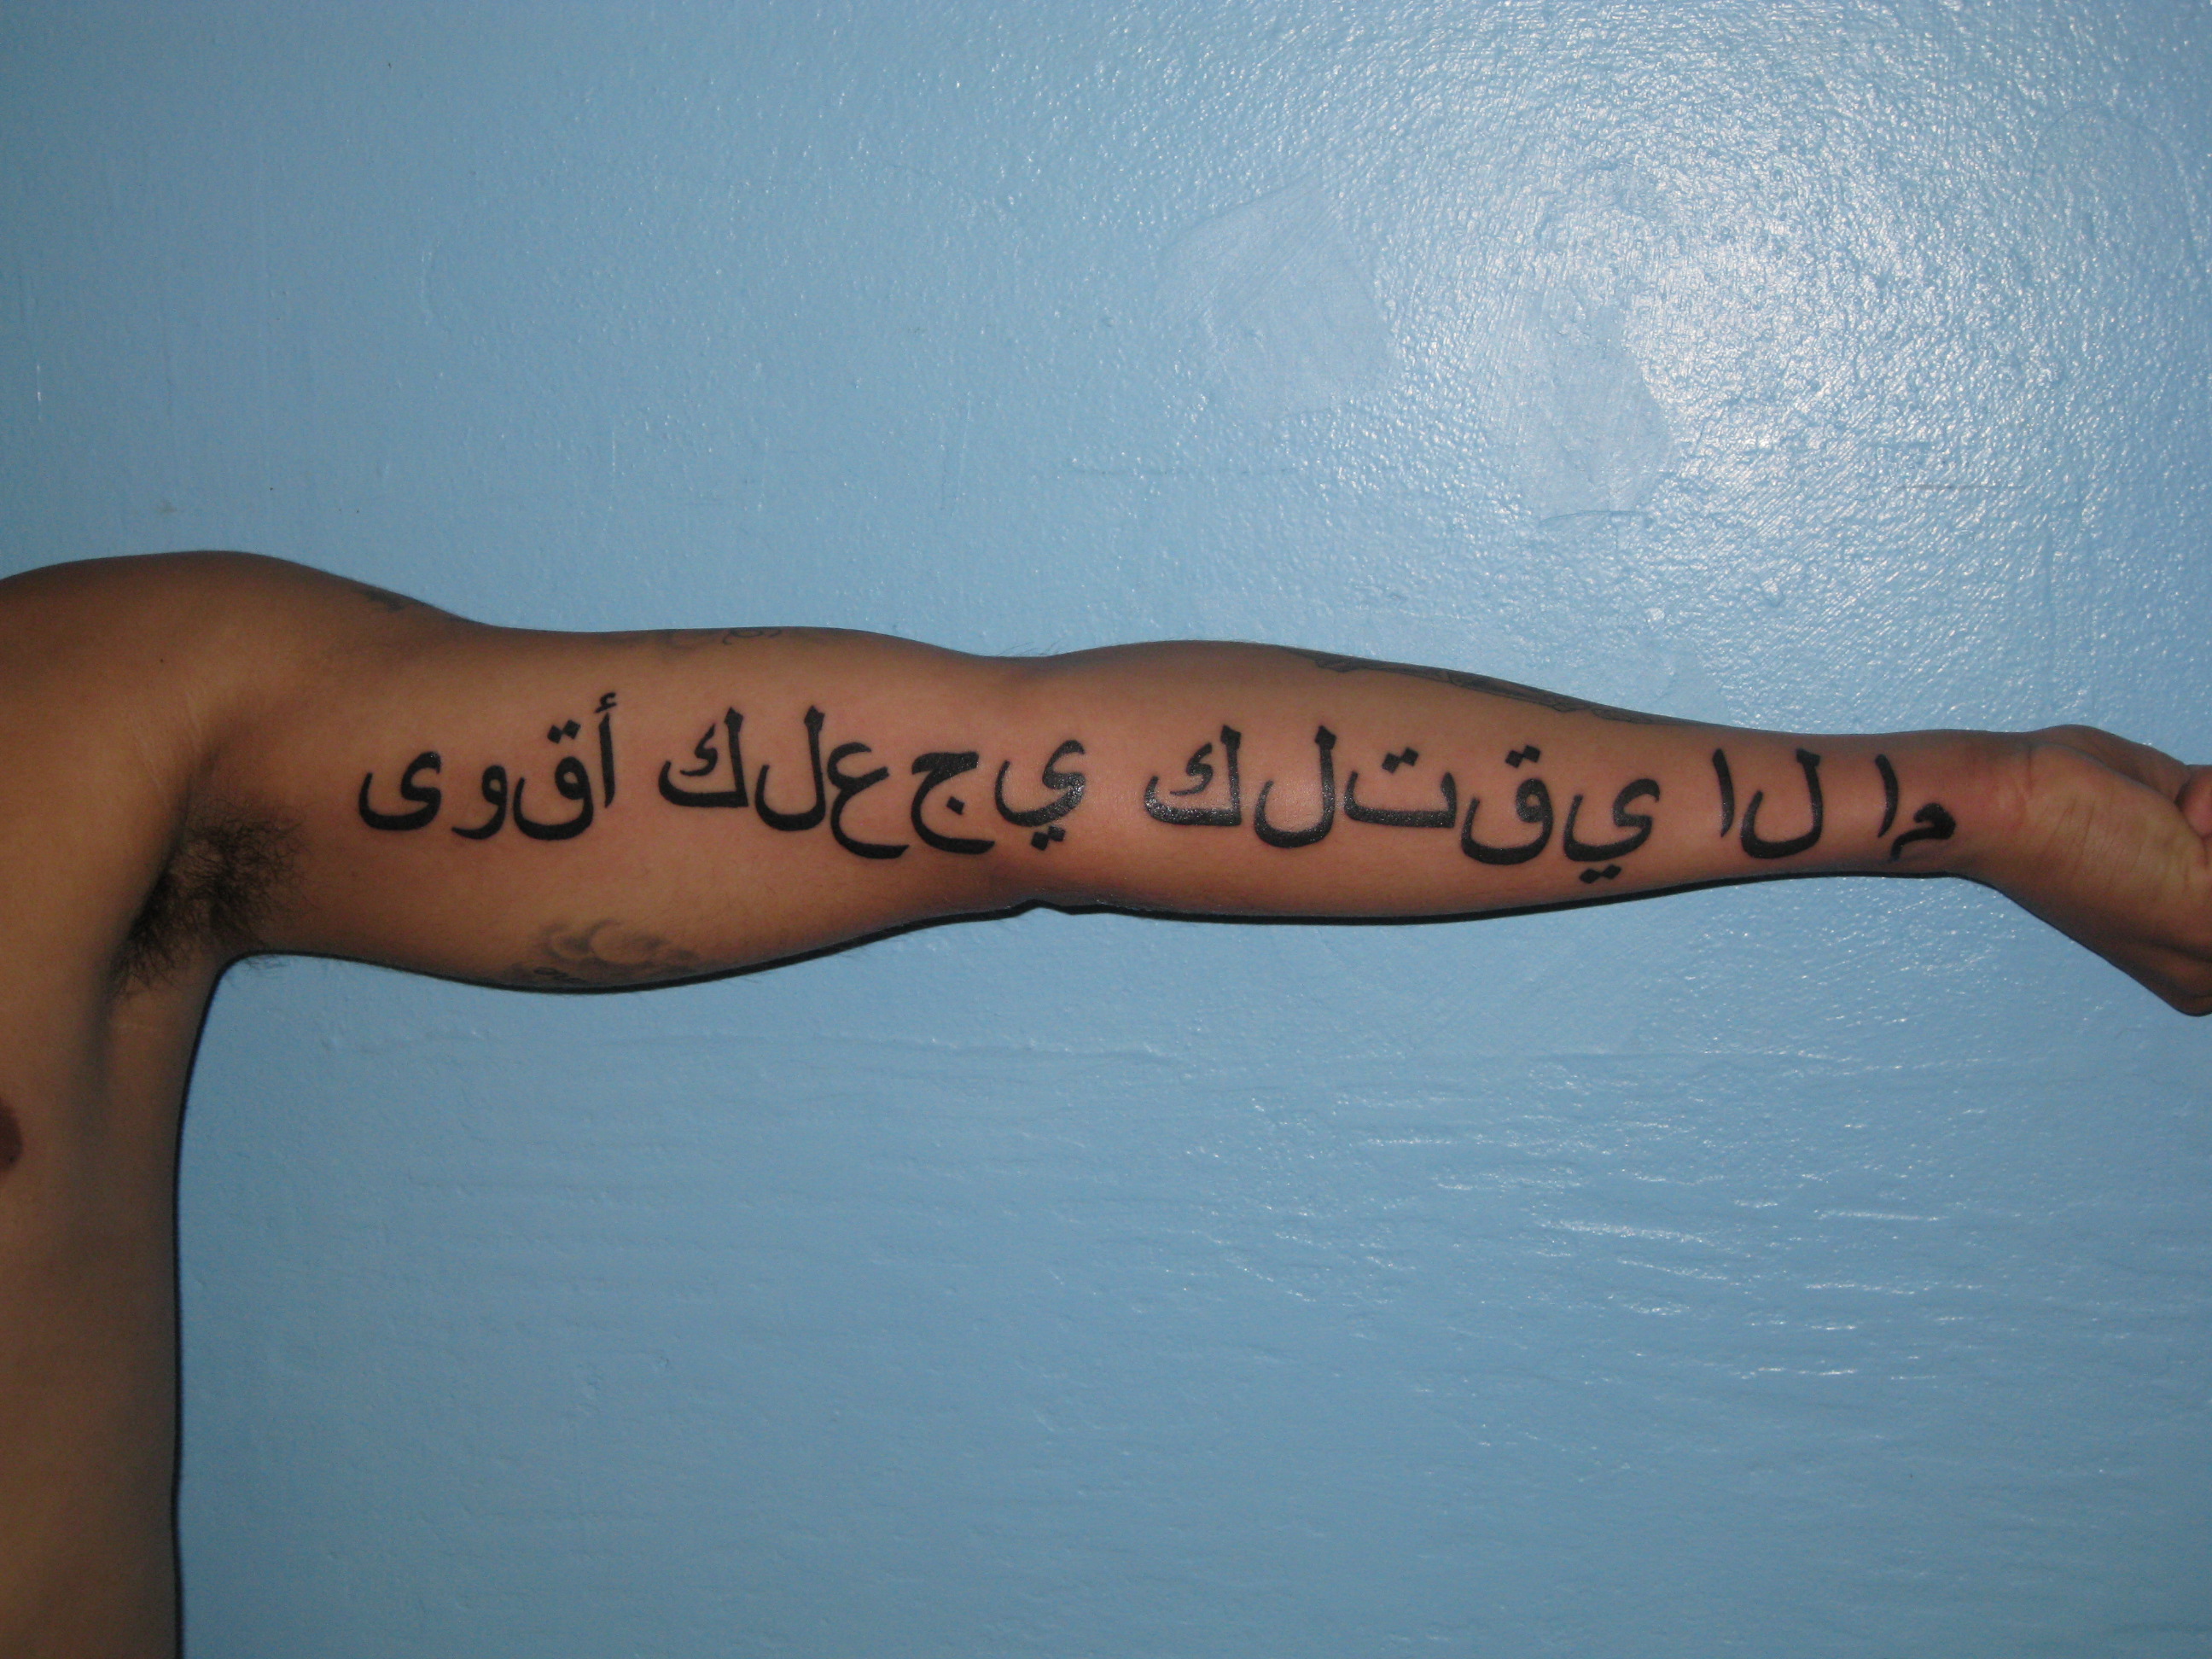 Arabic writing tattoo